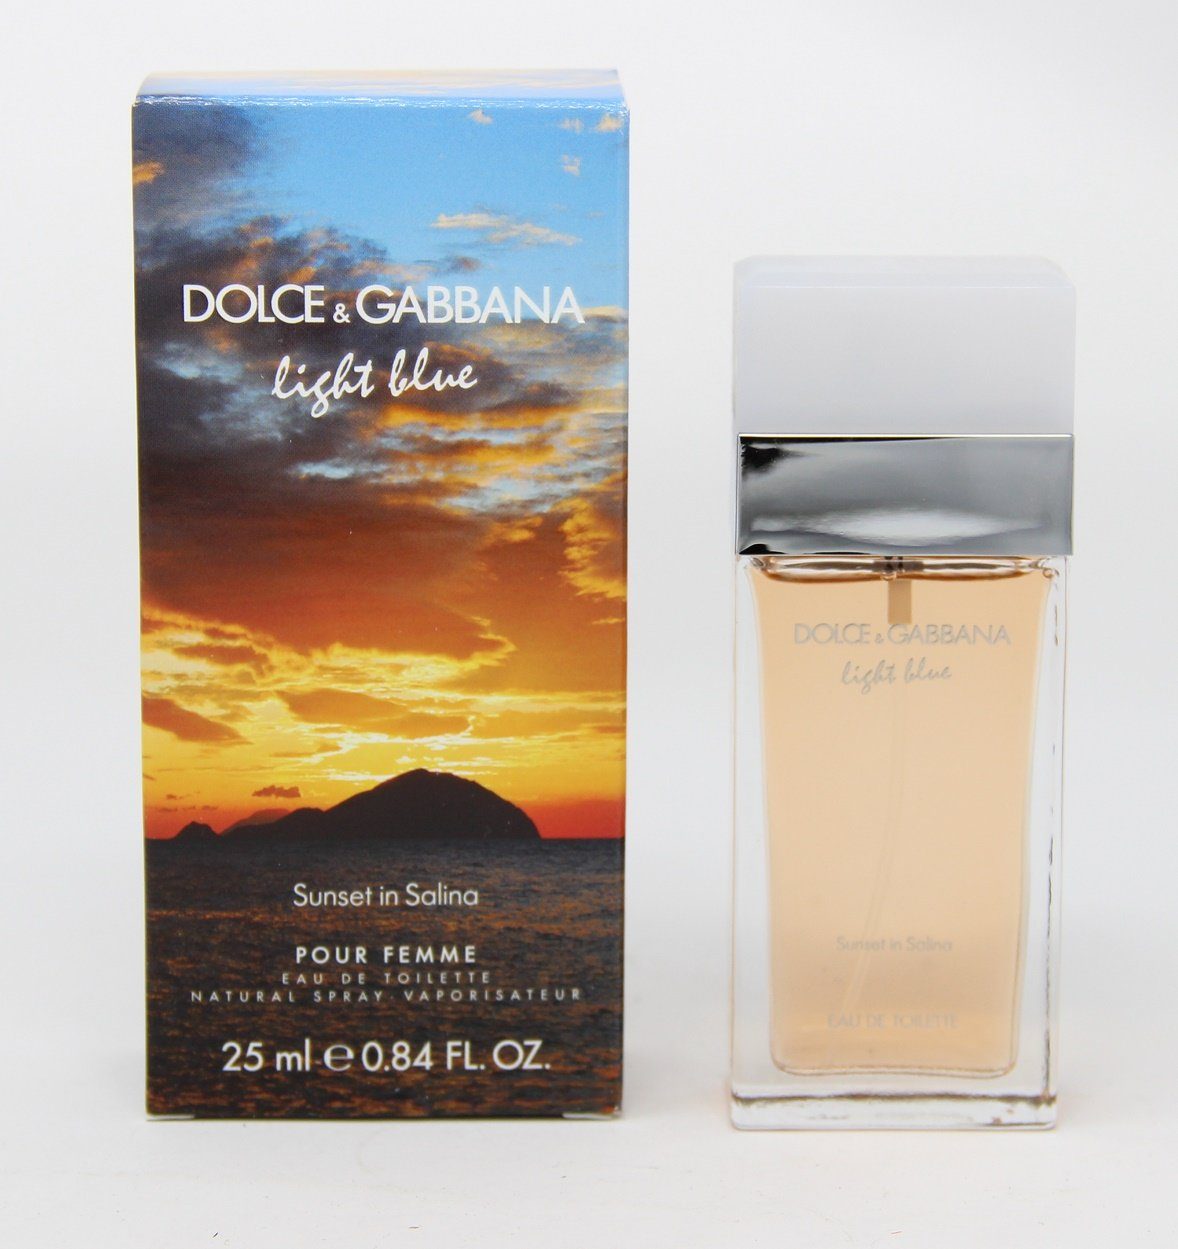 DOLCE & GABBANA Eau de Toilette Dolce & Gabbana Light Blue Sunset in Salina Eau de Toilette 25ml